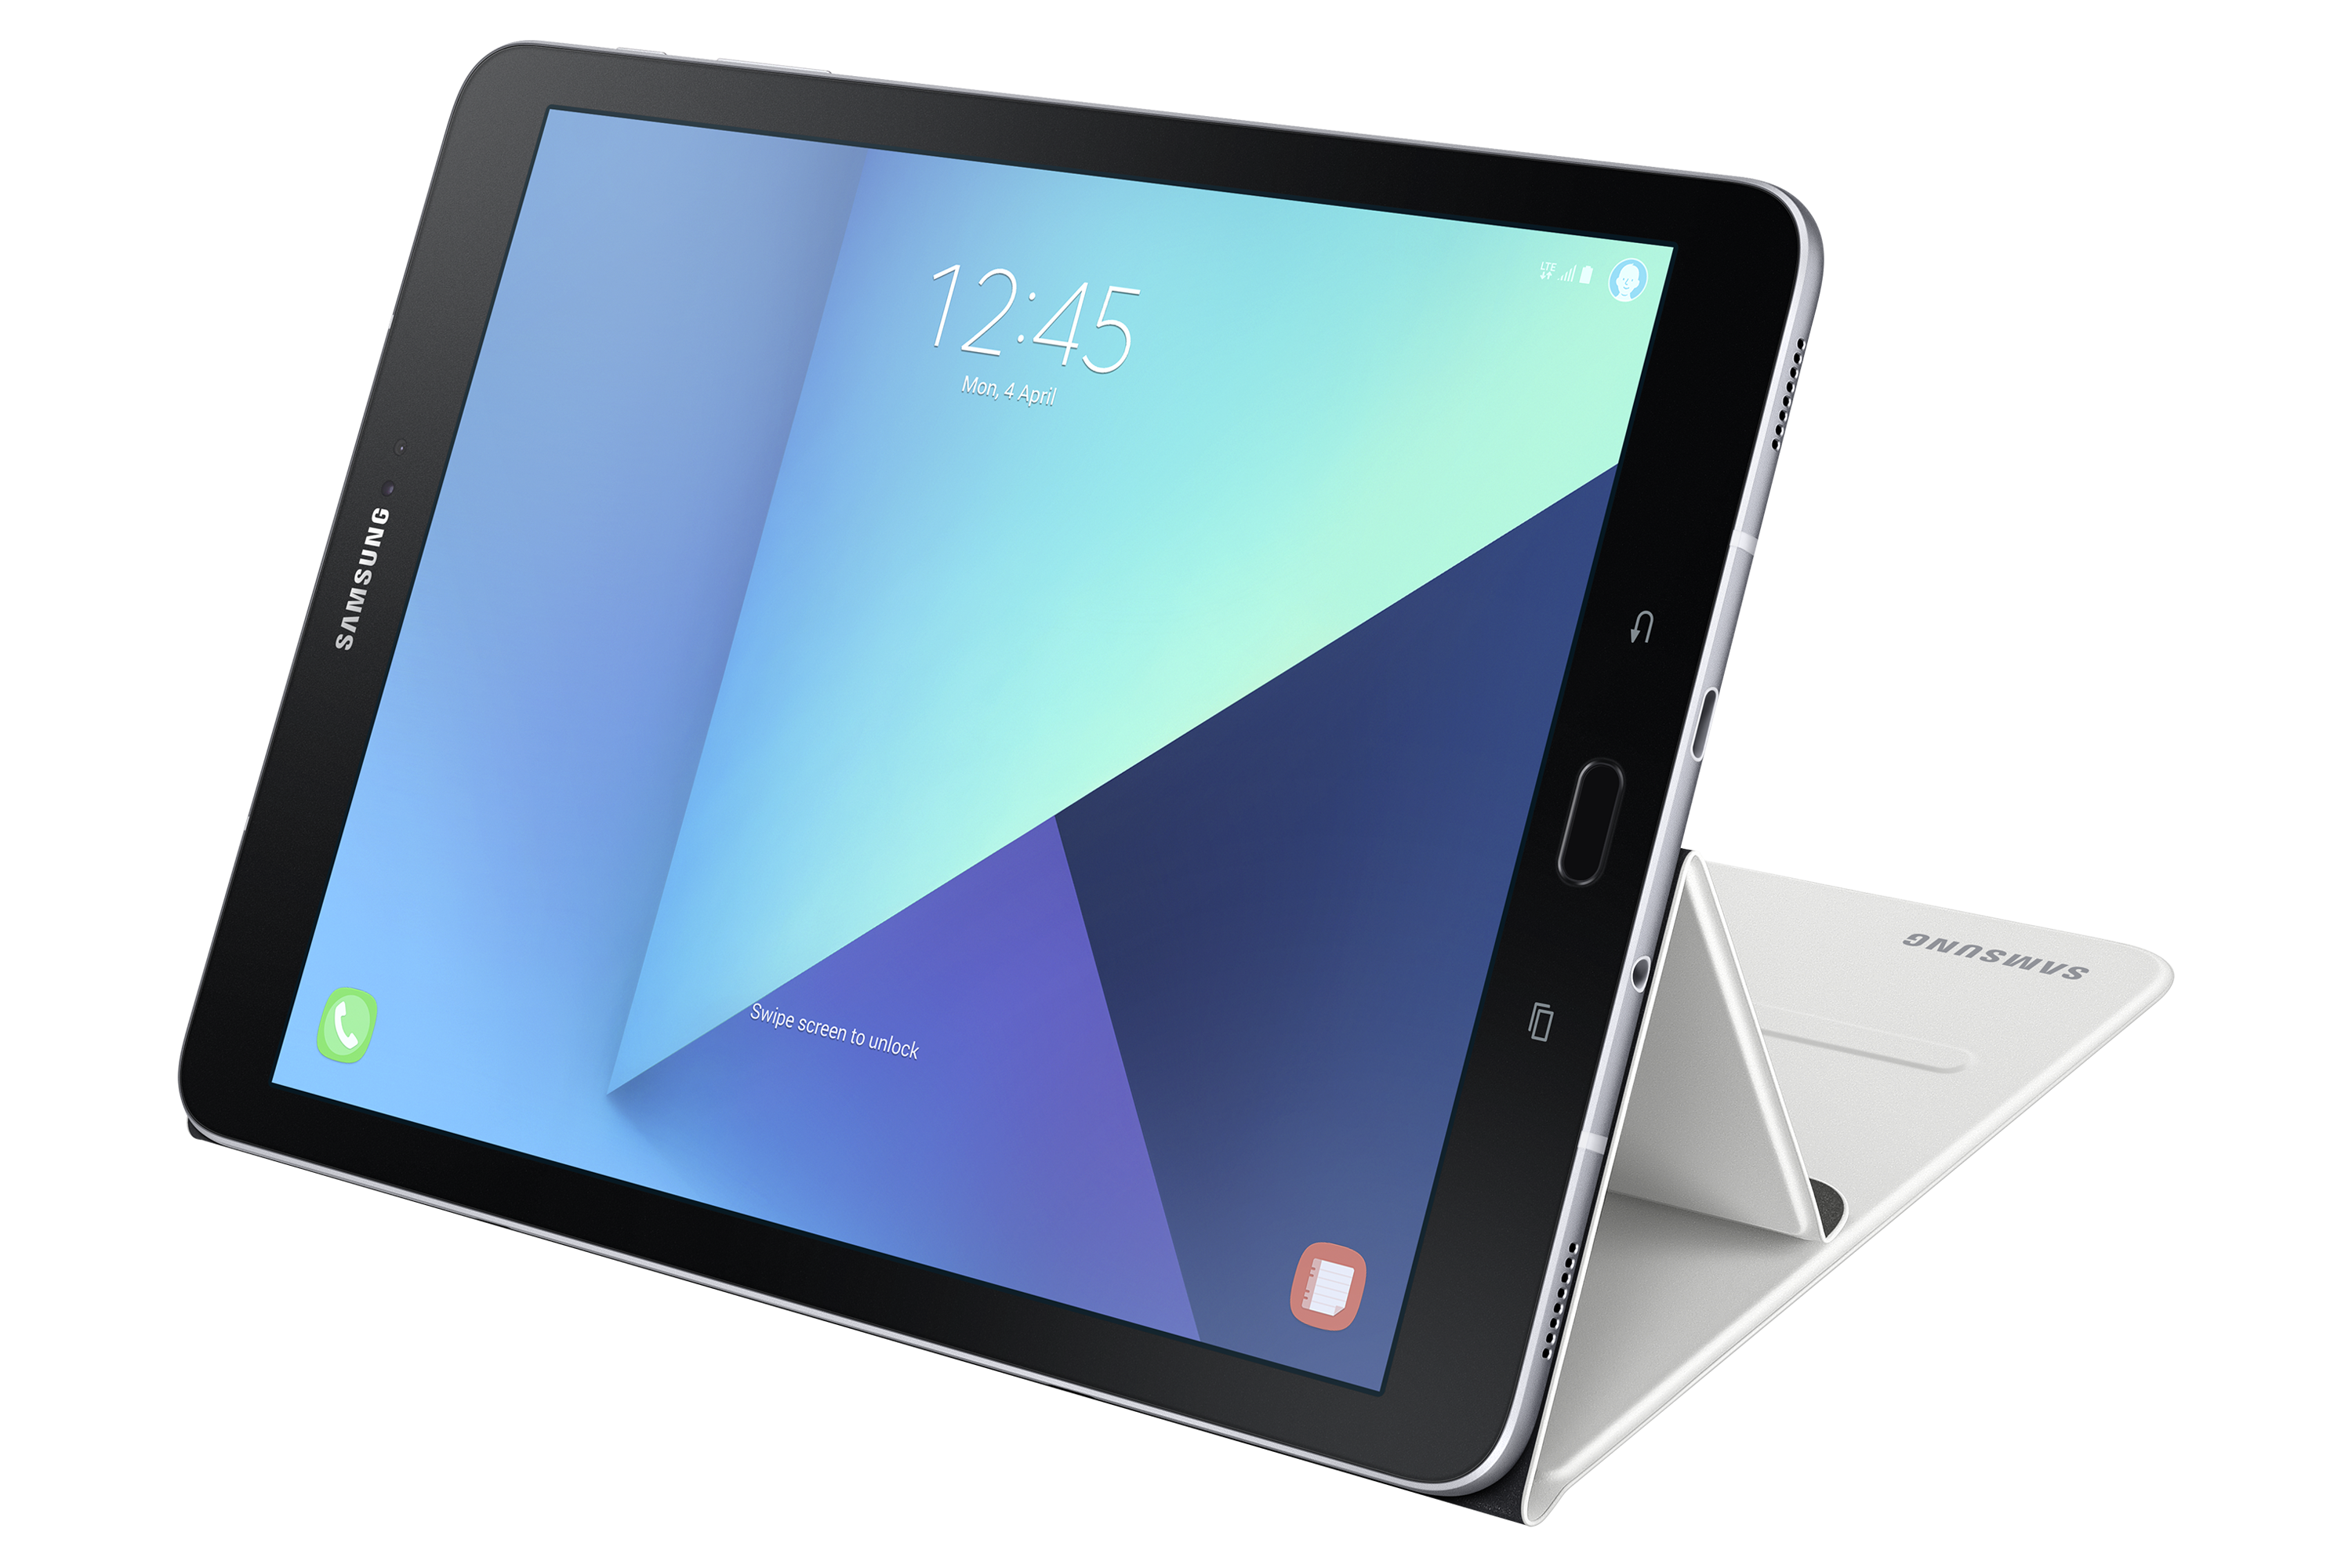 Samsung Galaxy Tab 3 Tablets For Sale In Stock Ebay